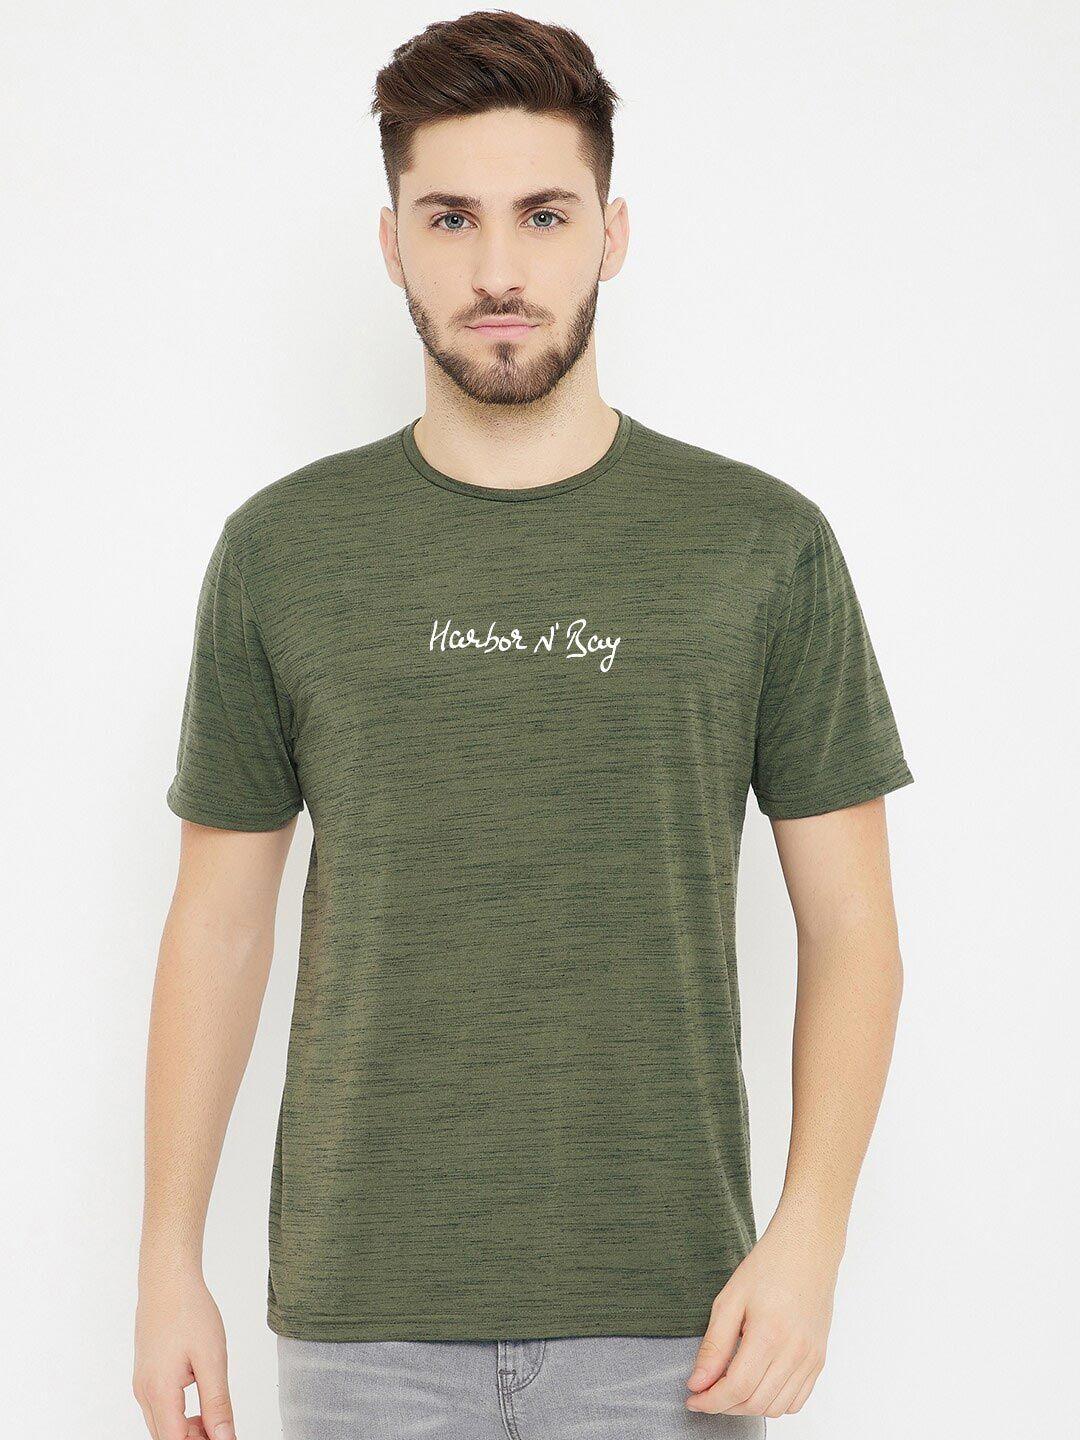 harbor n bay men olive green typography t-shirt